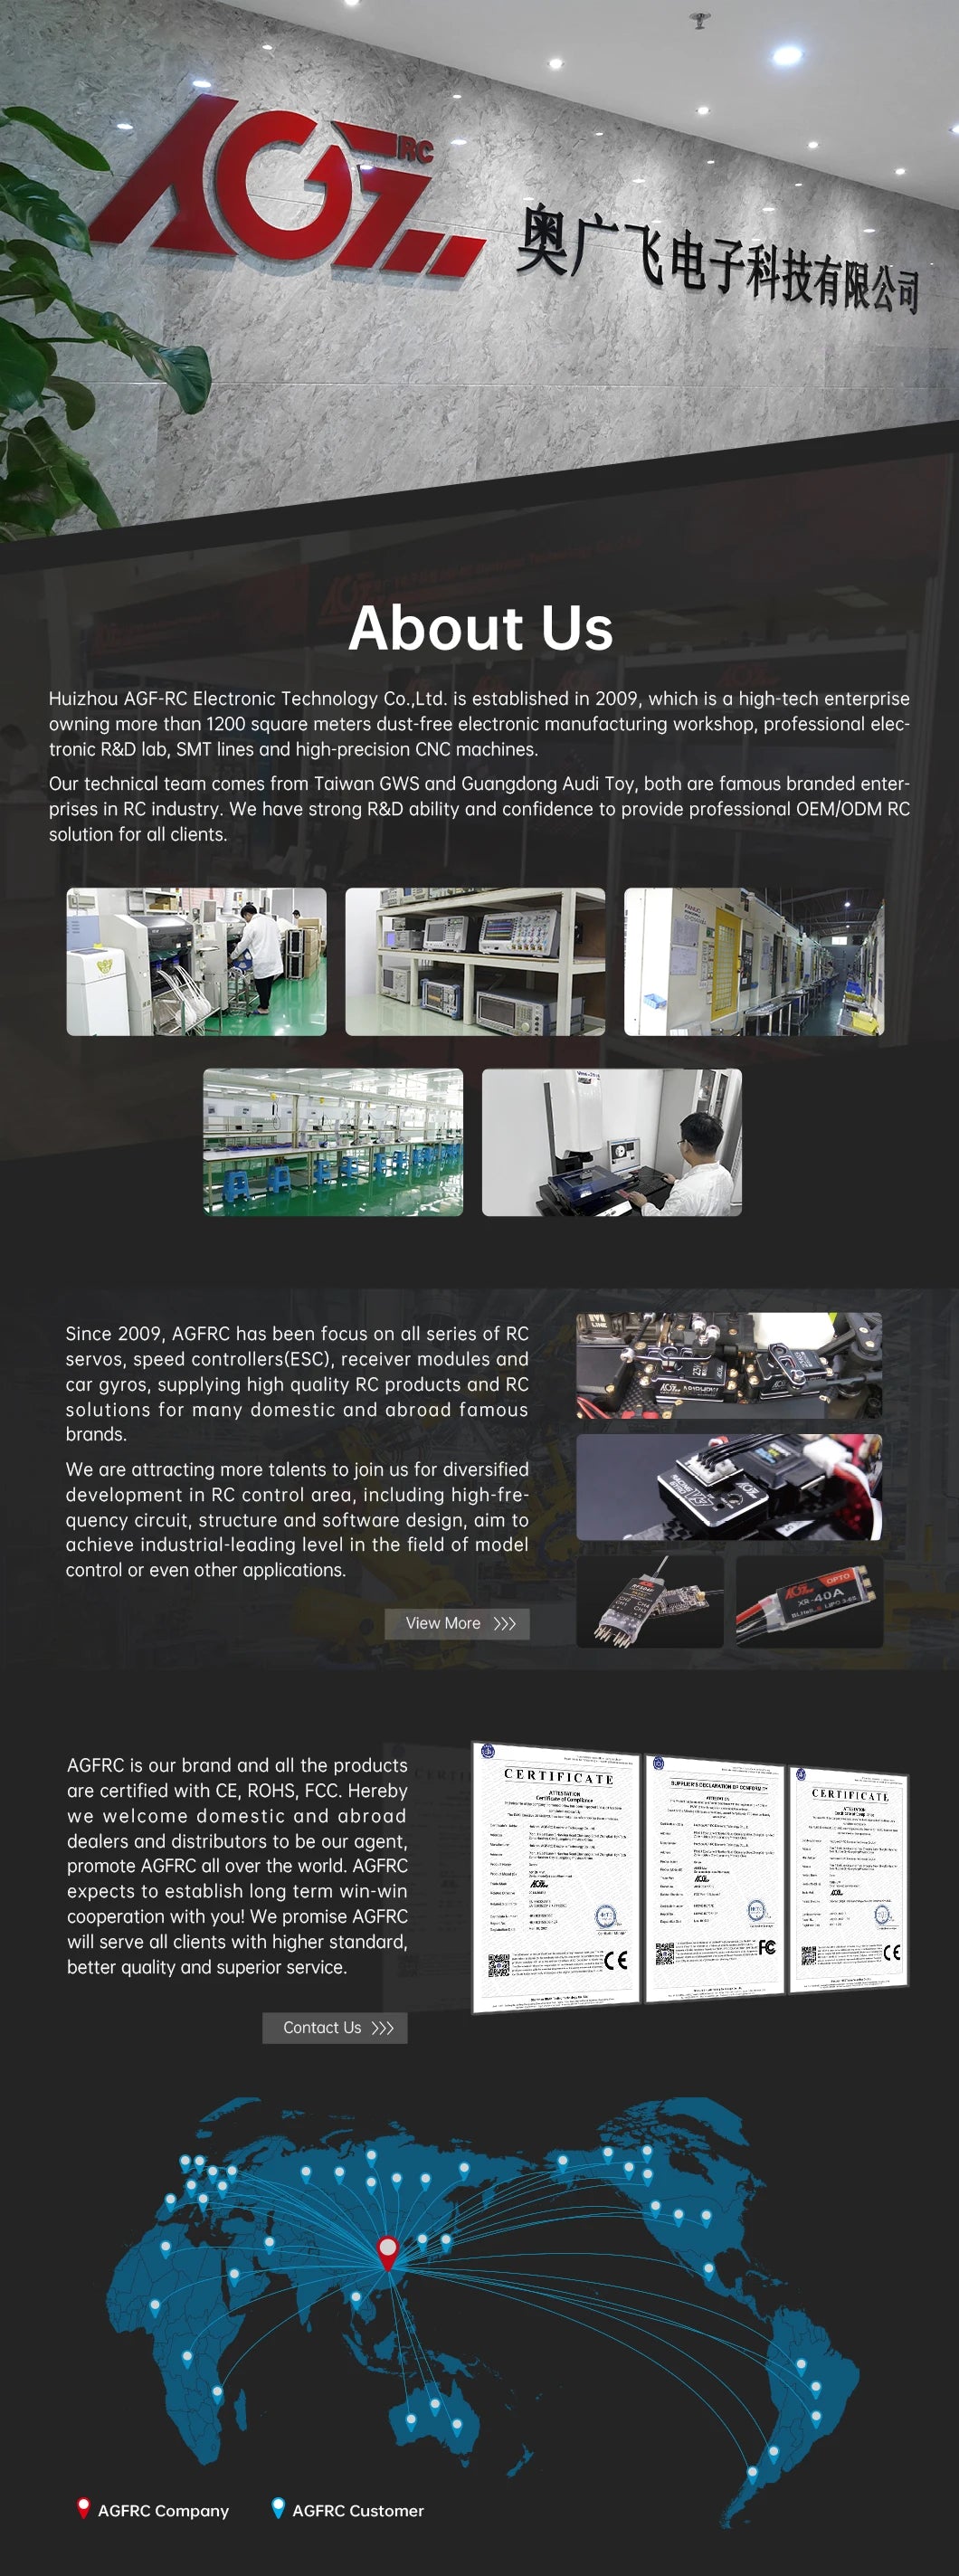 AGFRC A11CLS V3, Huizhou AGF-RC Electronic Technology Co-,Ltd. is a